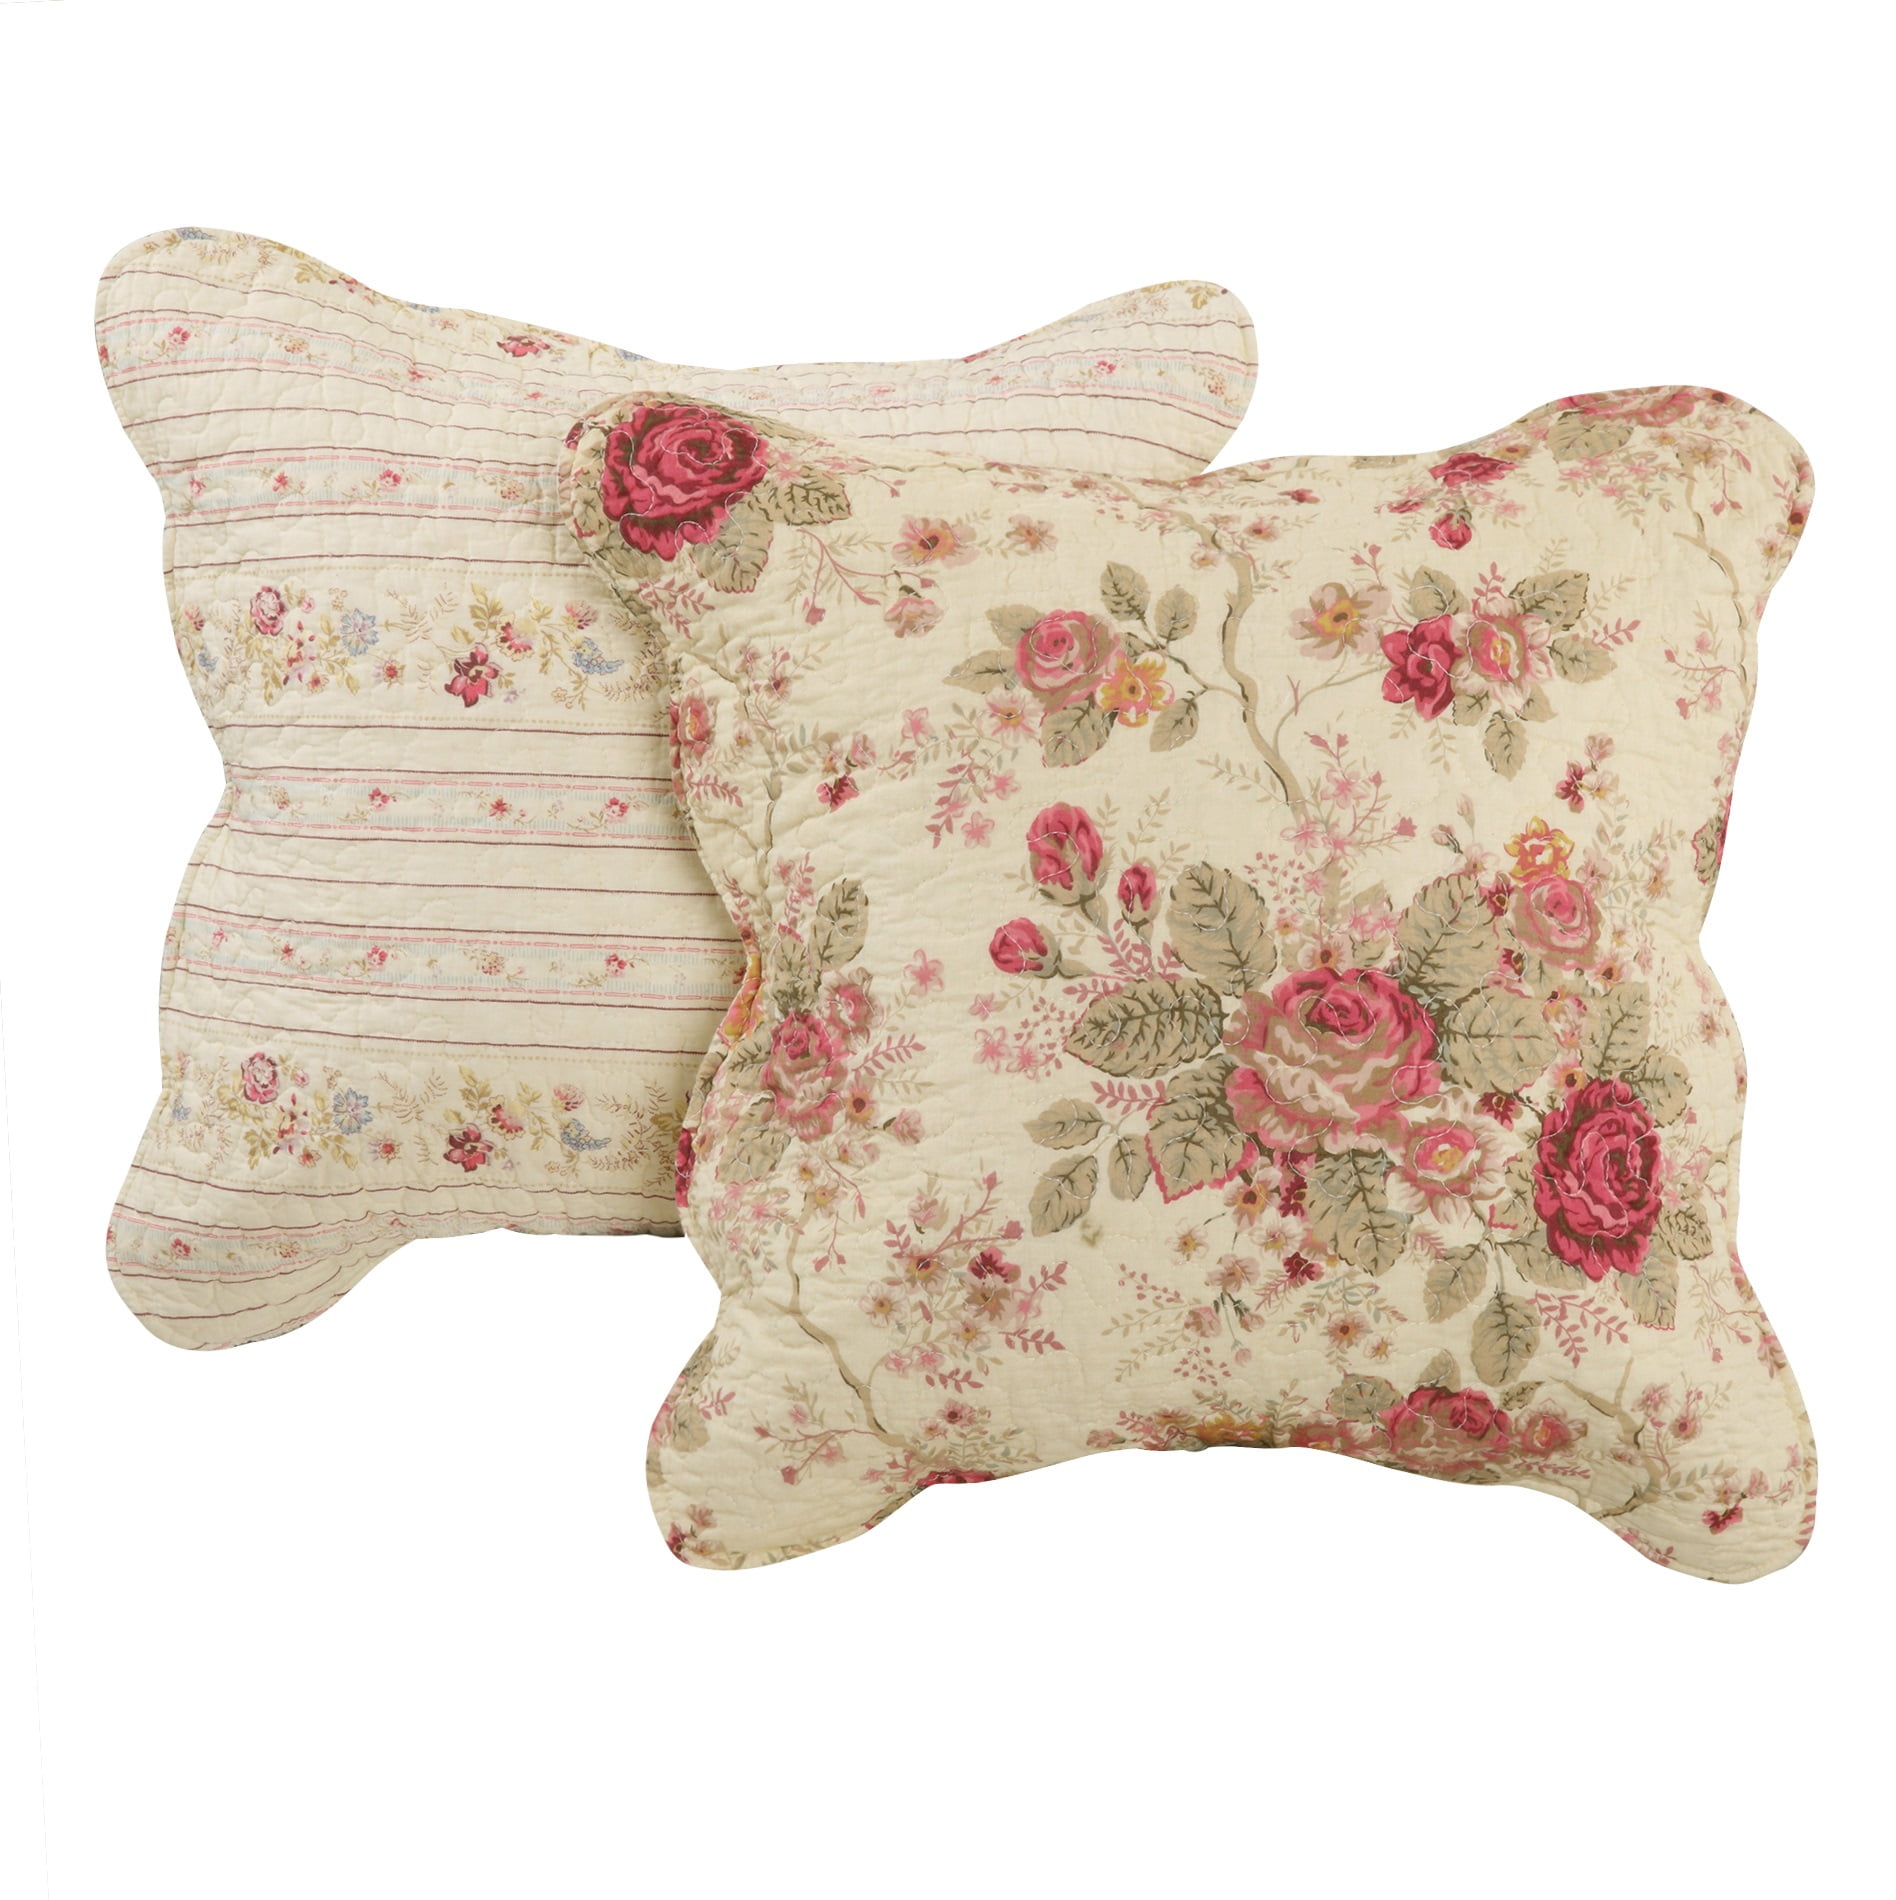 Global Trends Antique Rose Decorative Pillow Set - Walmart.com ...